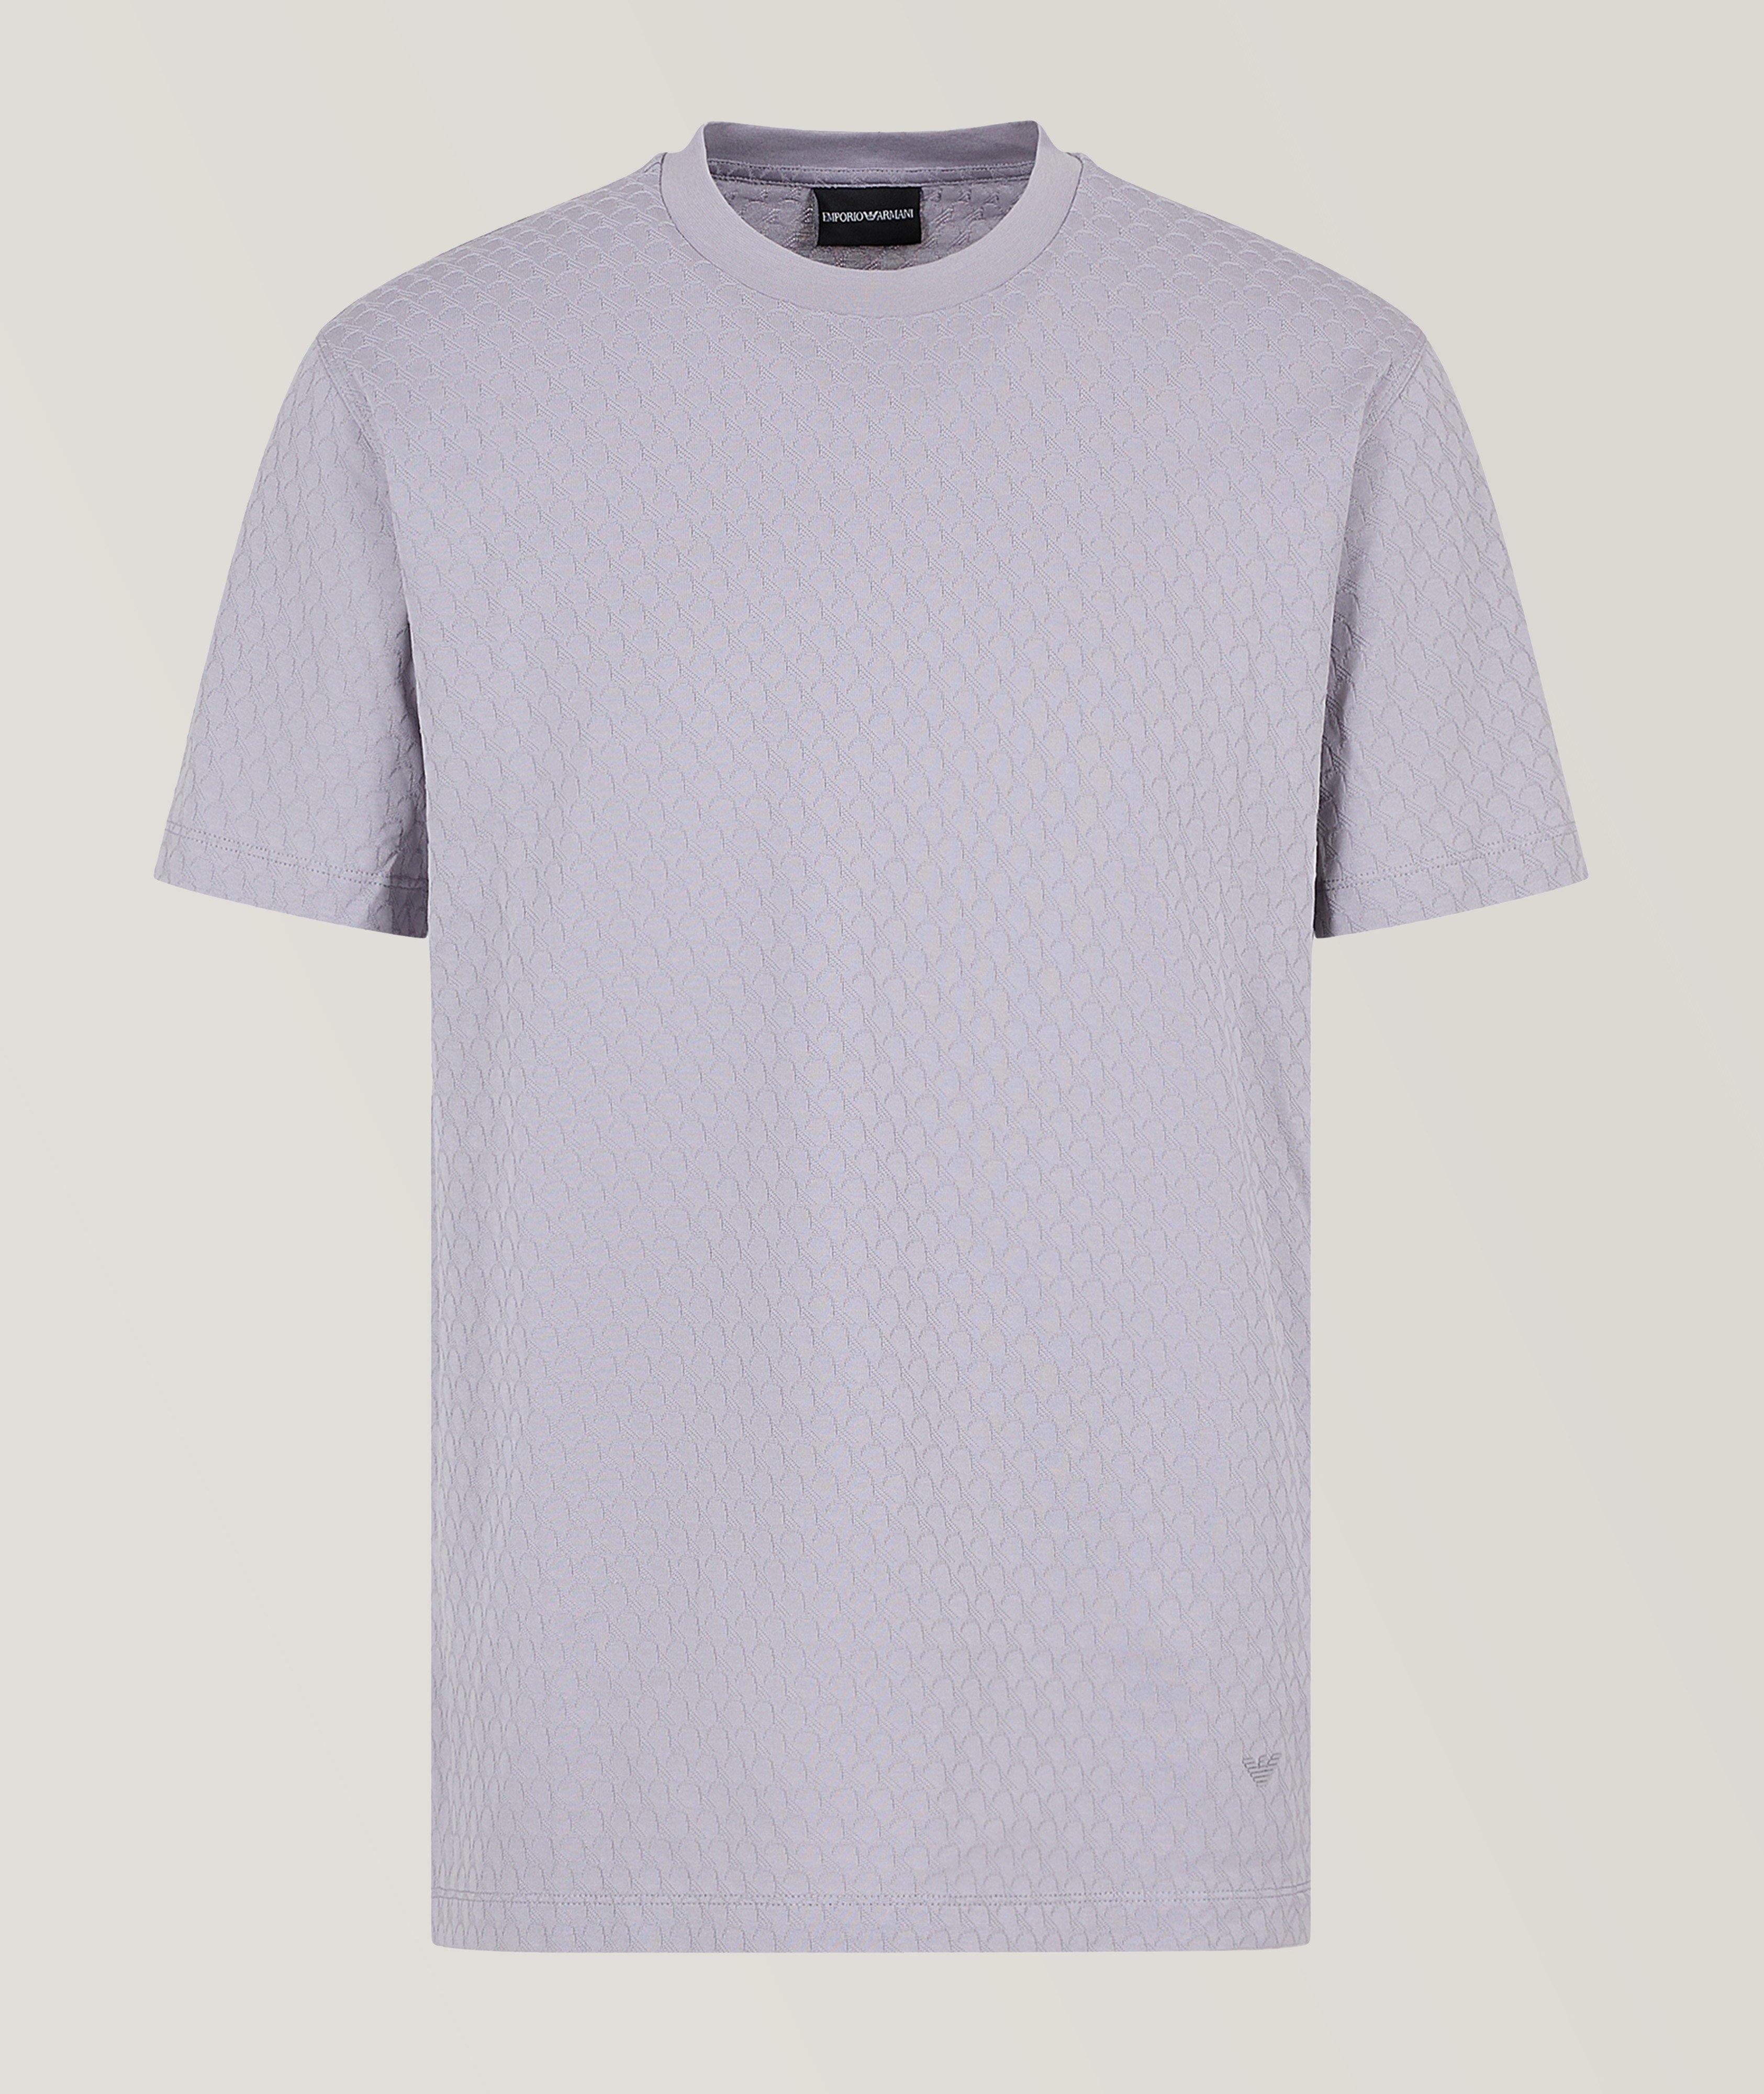 Jacquard Cotton Jersey T-Shirt image 0